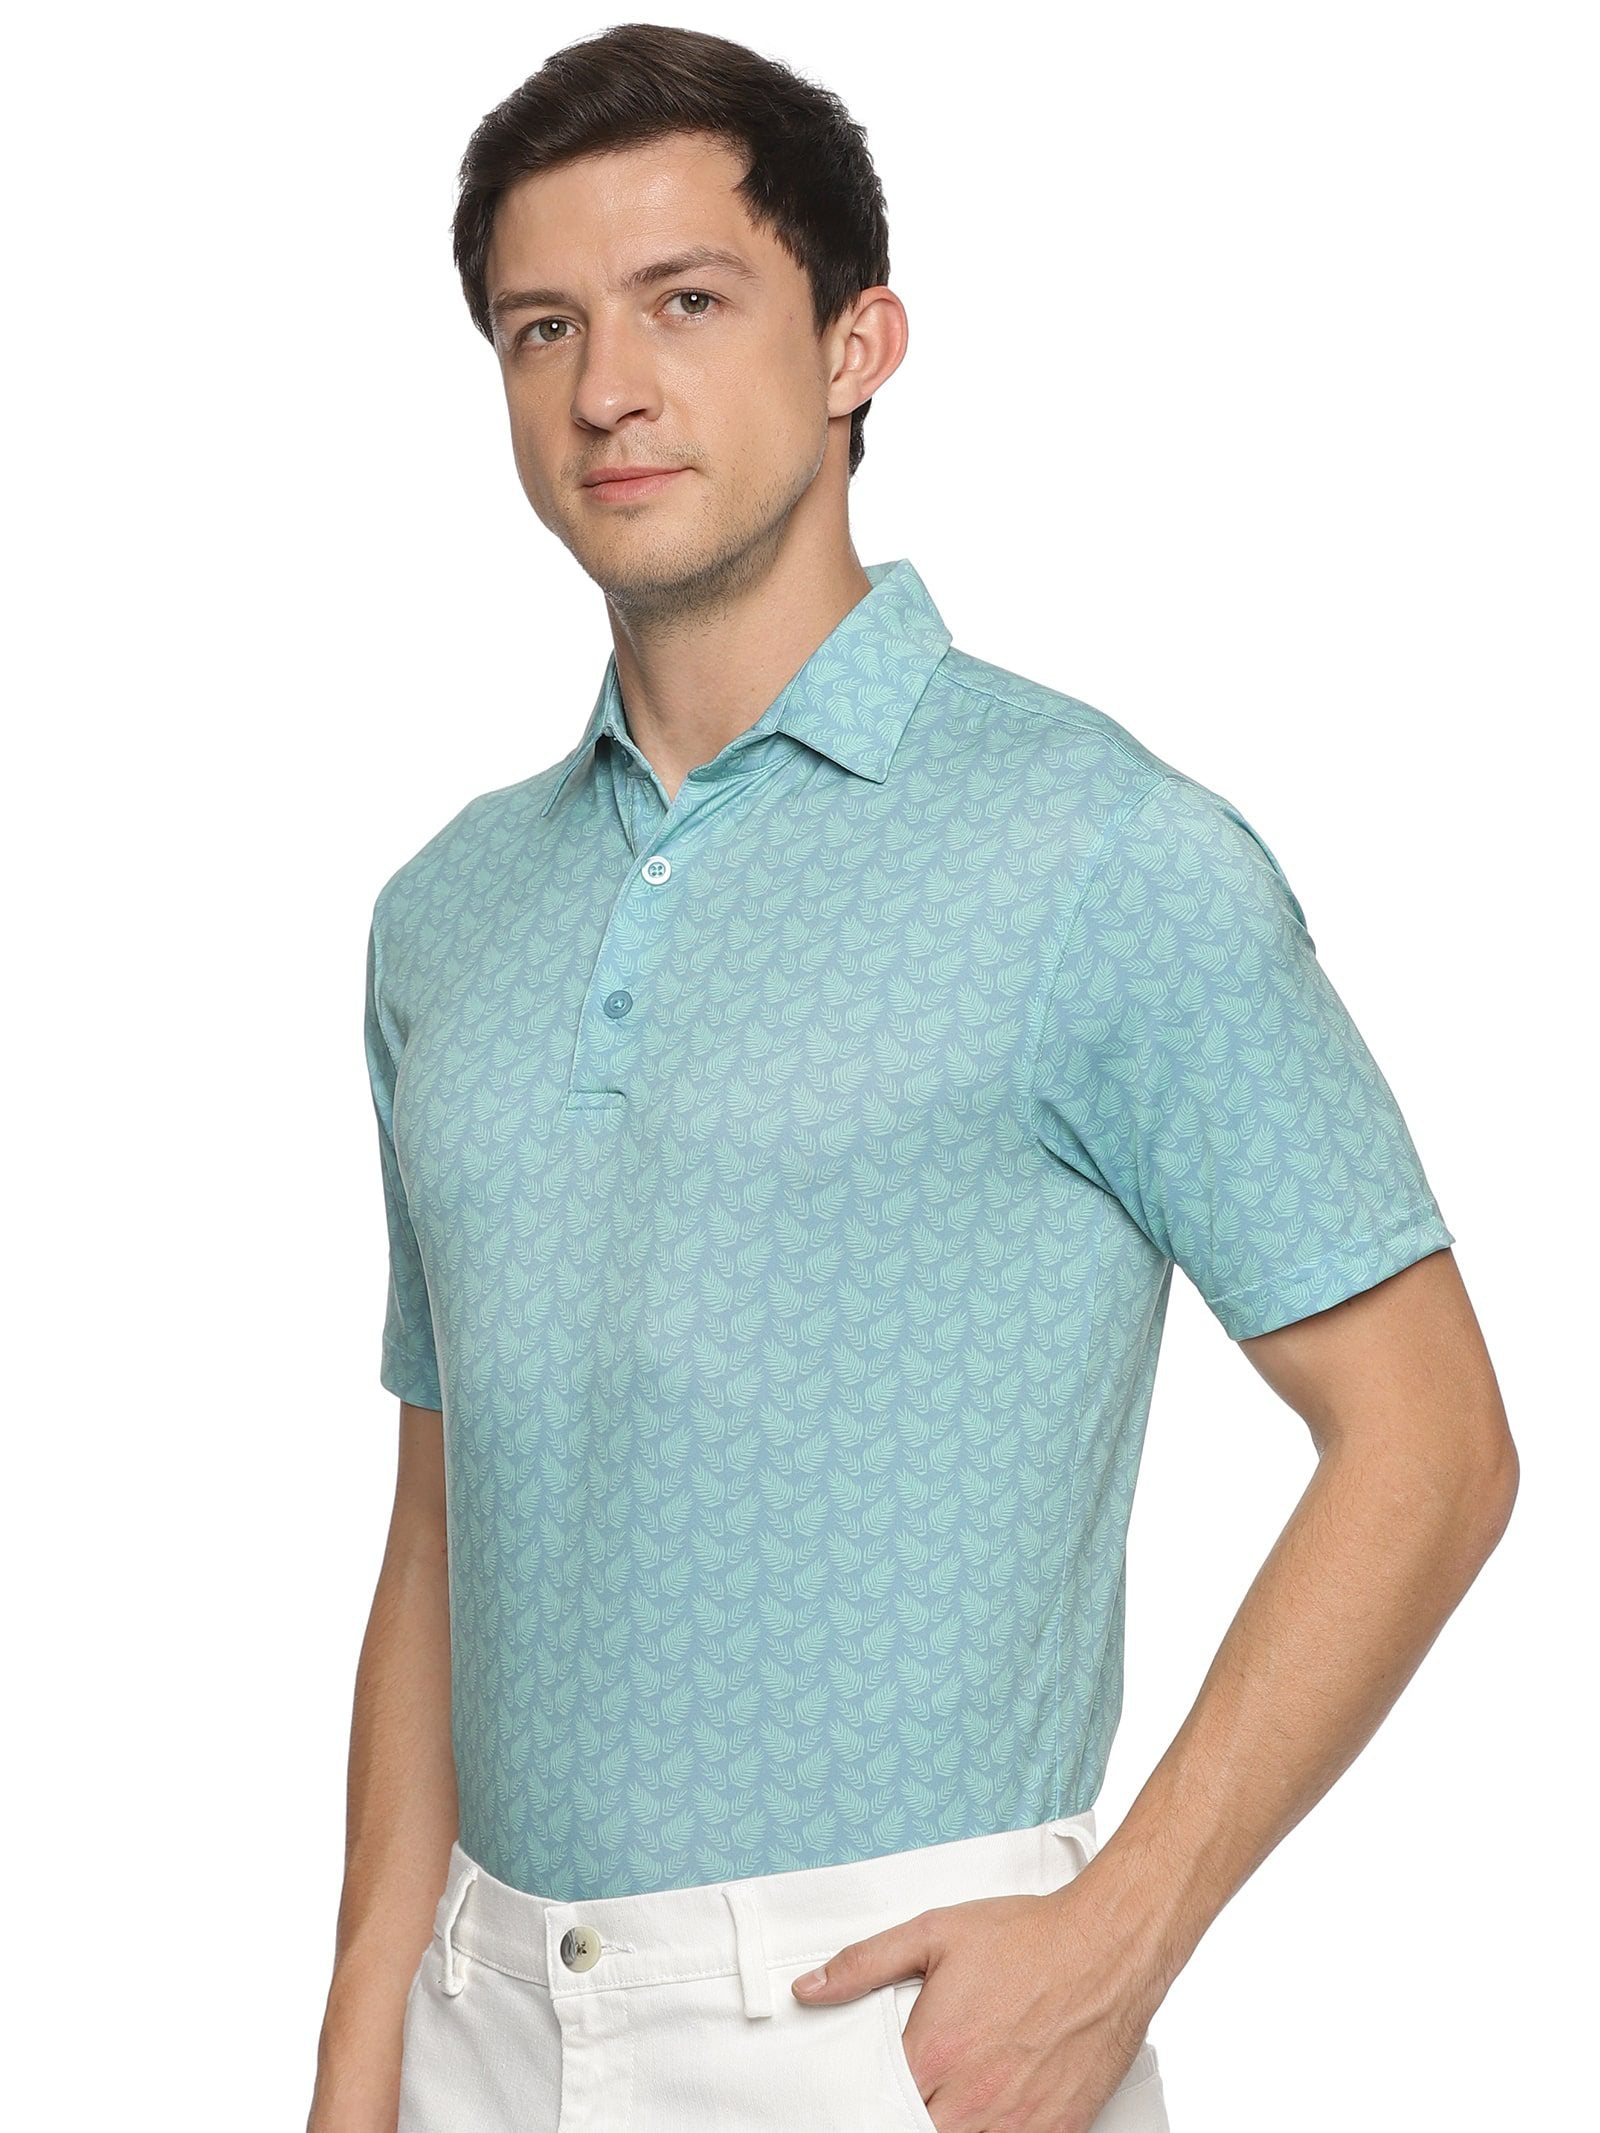 Styzen Foliage Men's Golf Polo T-shirt